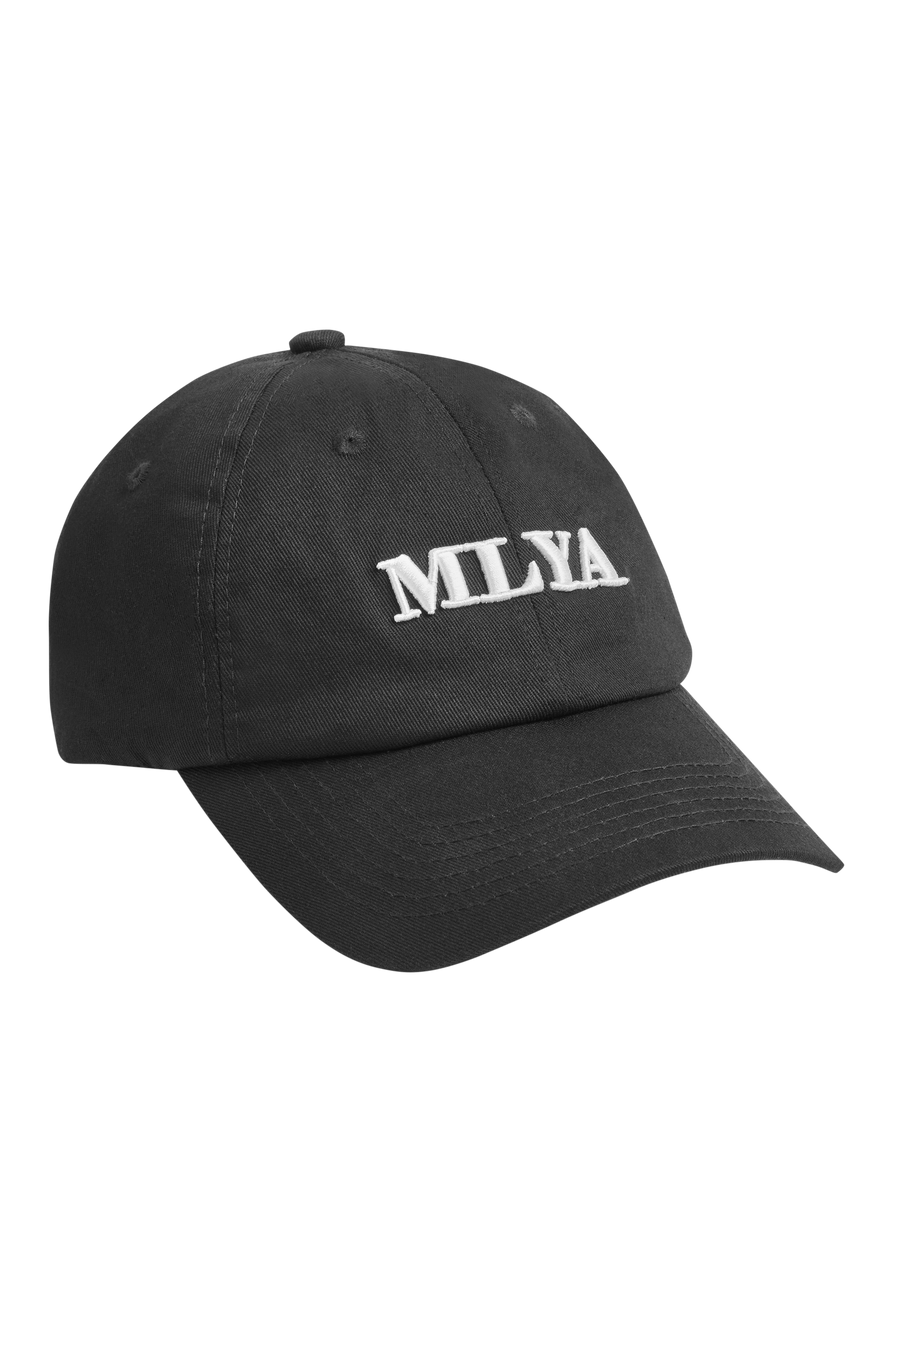 MLYA EMBROIDERED CAP